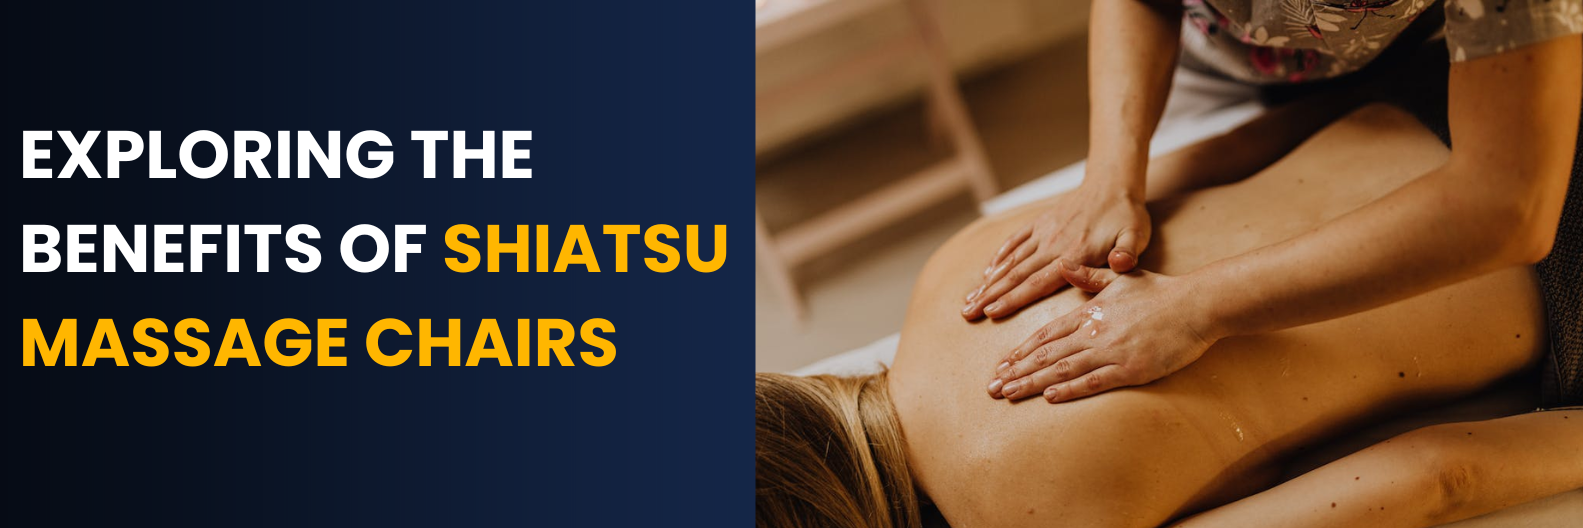 Shiatsu massage chair benefits encompass relaxation, stress relief, and rejuvenation through precise pressure point stimulation.